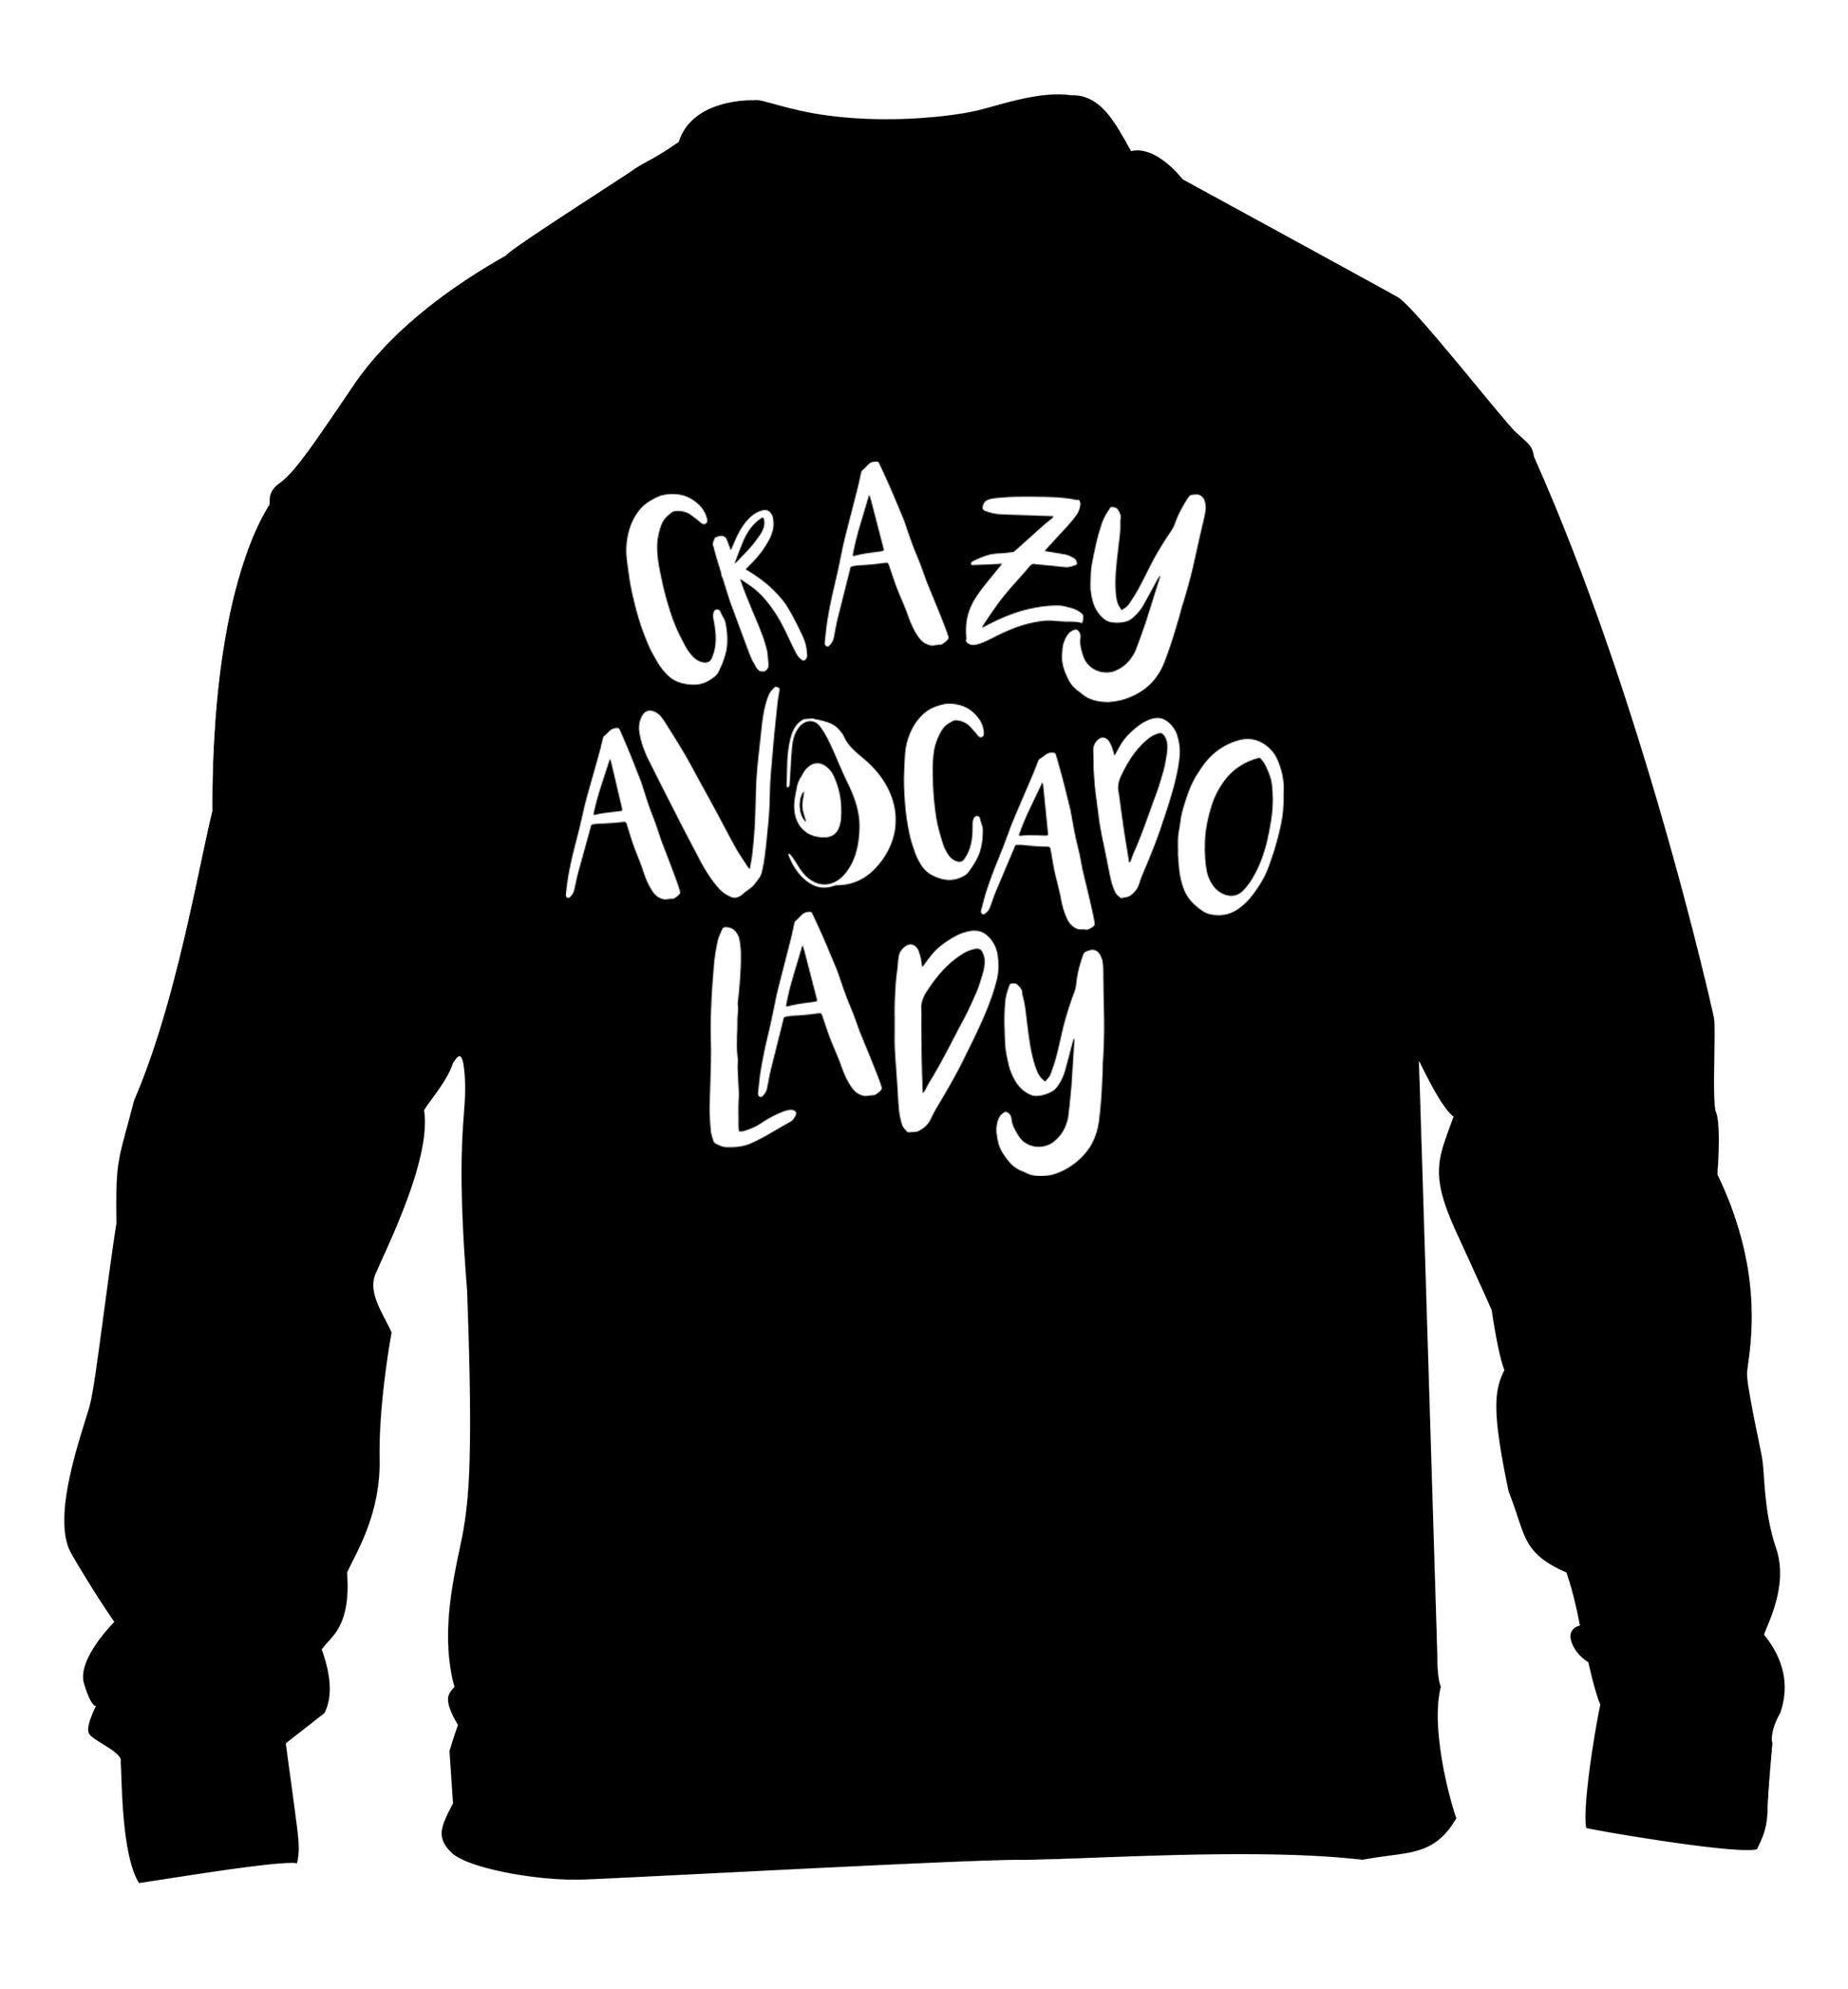 Crazy avocado lady children's black sweater 12-14 Years